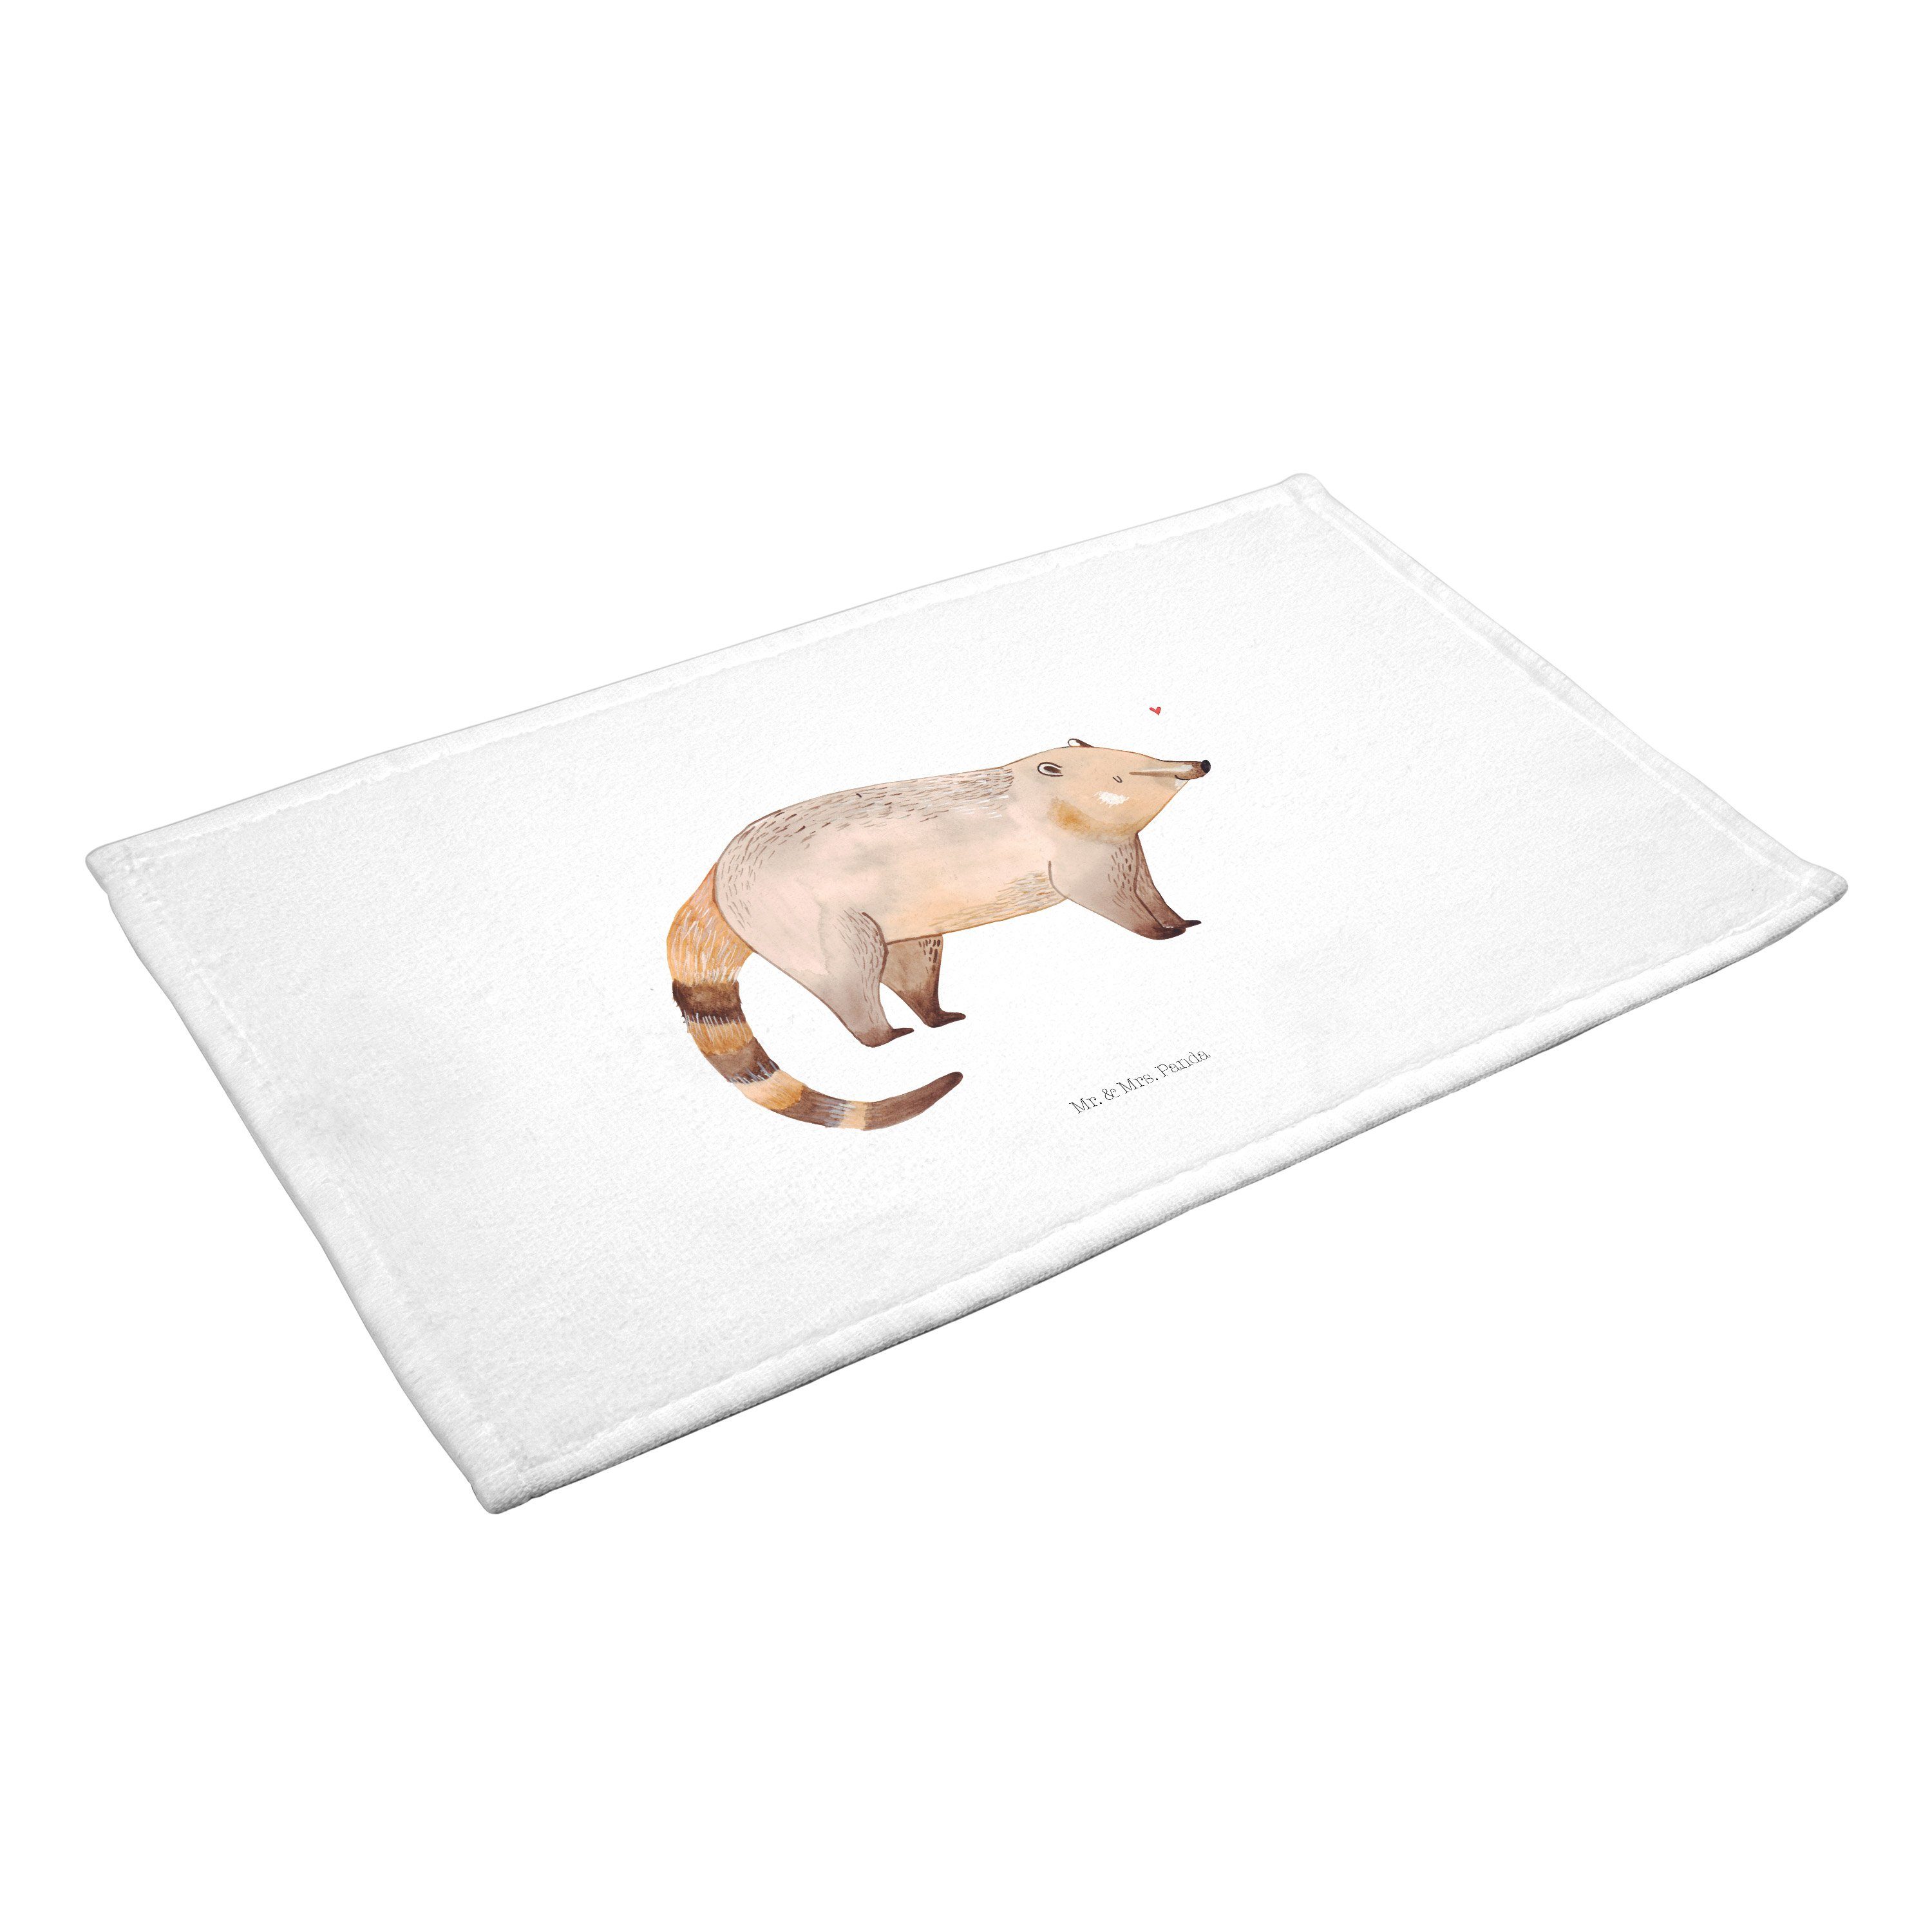 Mr. & Mrs. Panda Handtuch Nasenbär Geschenk, - Weiß (1-St) - Baby, Handtücher, Handtuch, R, Tiermotive